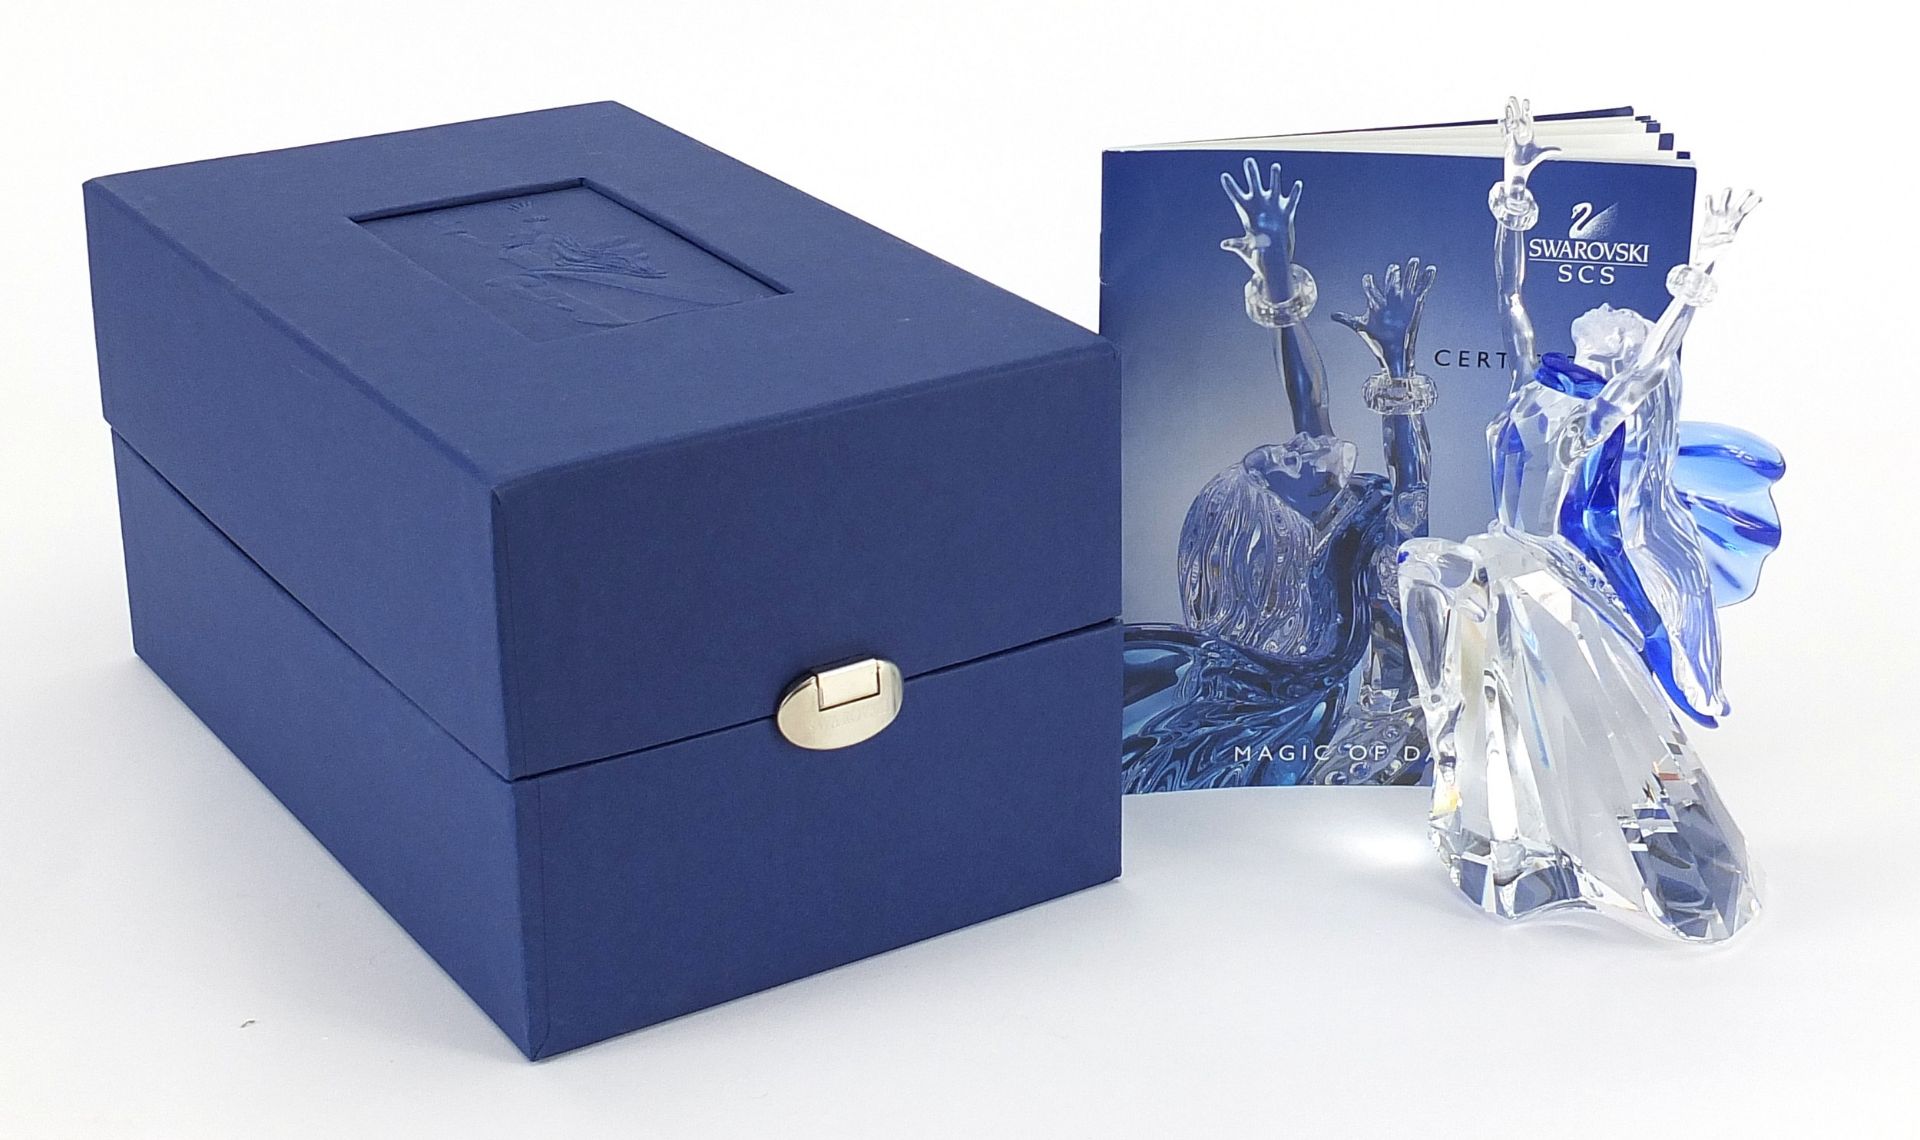 Swarovski Crystal Magic of Dance figurine with box, 19.5cm high - Image 5 of 6